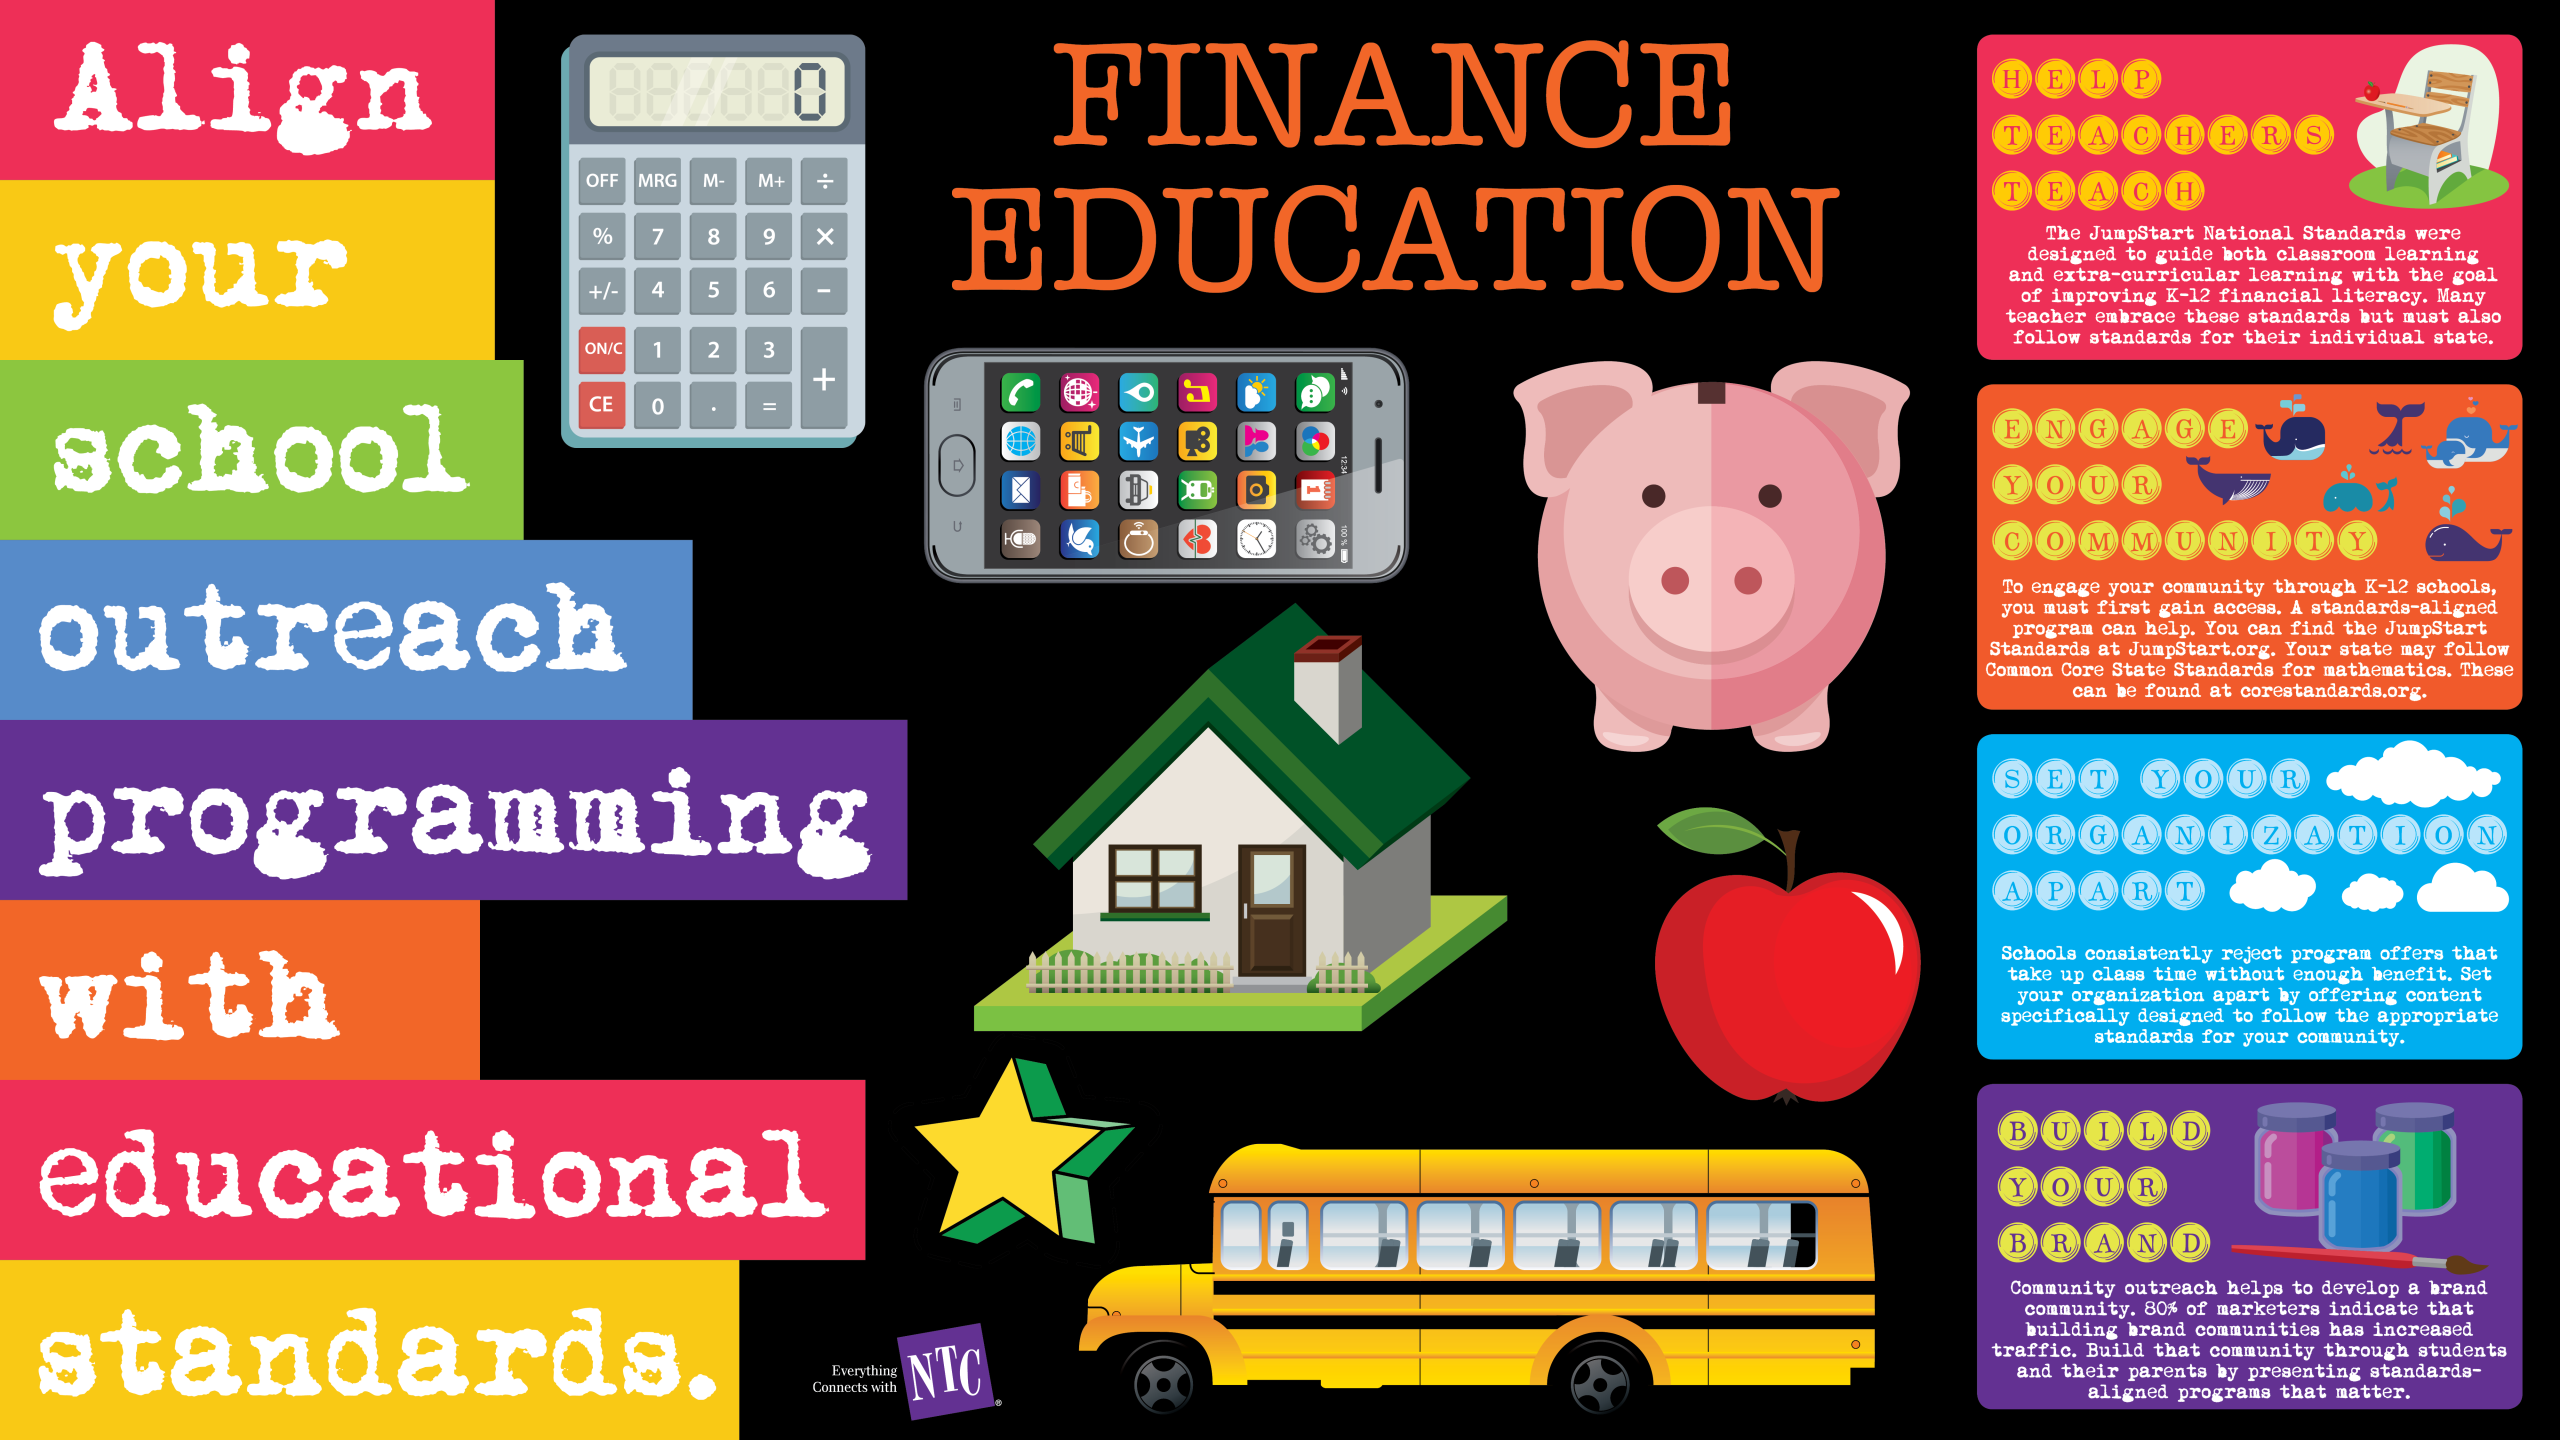 Educational Standards financial